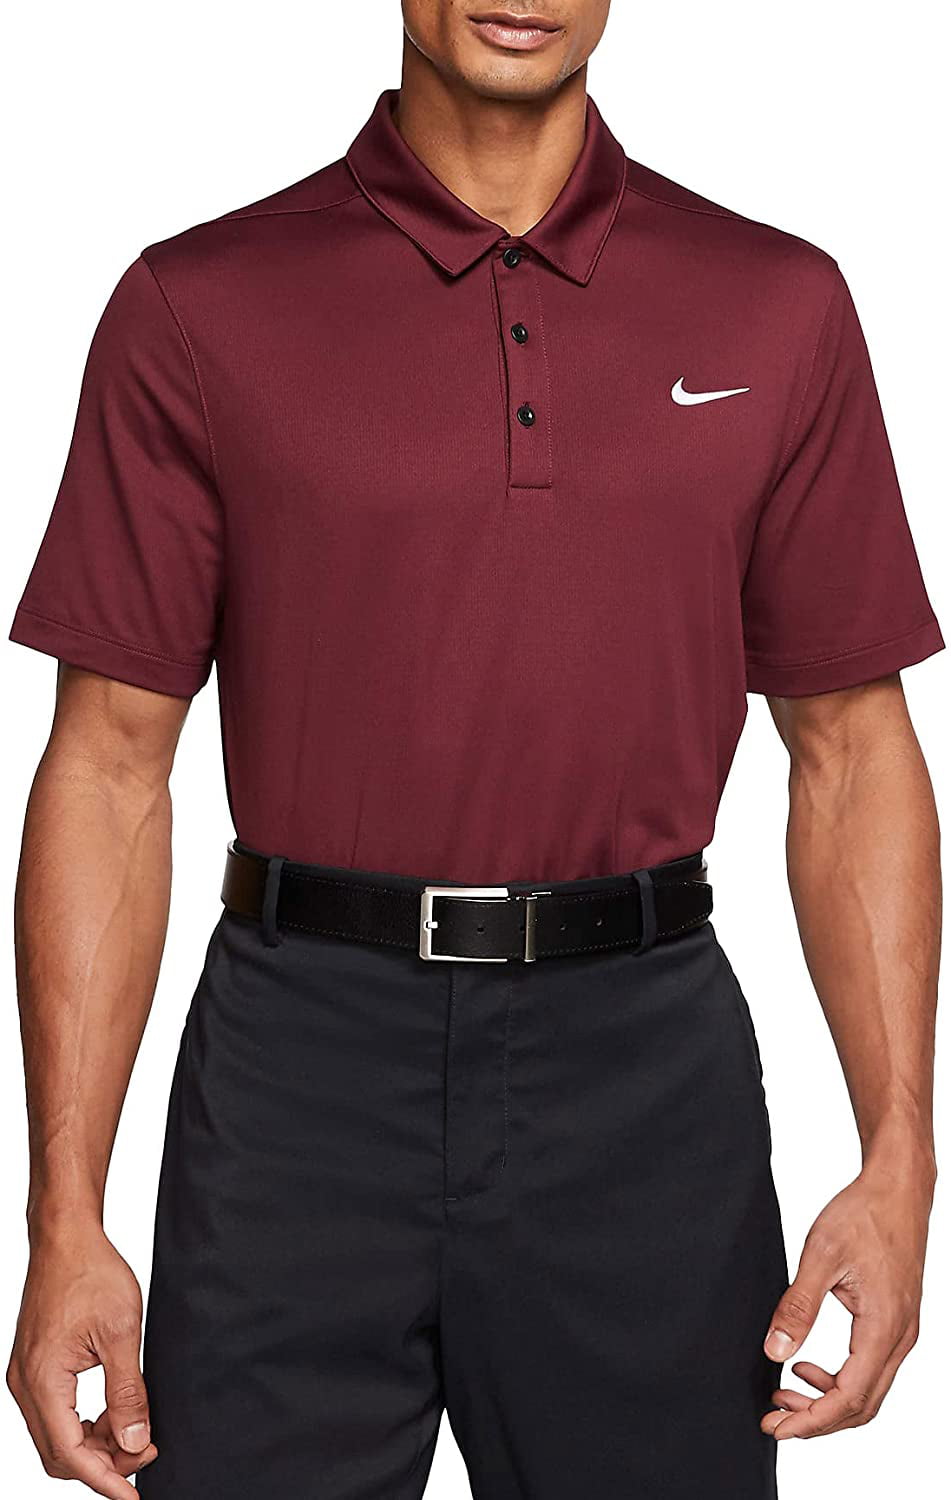 Nike Mens Football Golf Athletic Polo S - Walmart.com